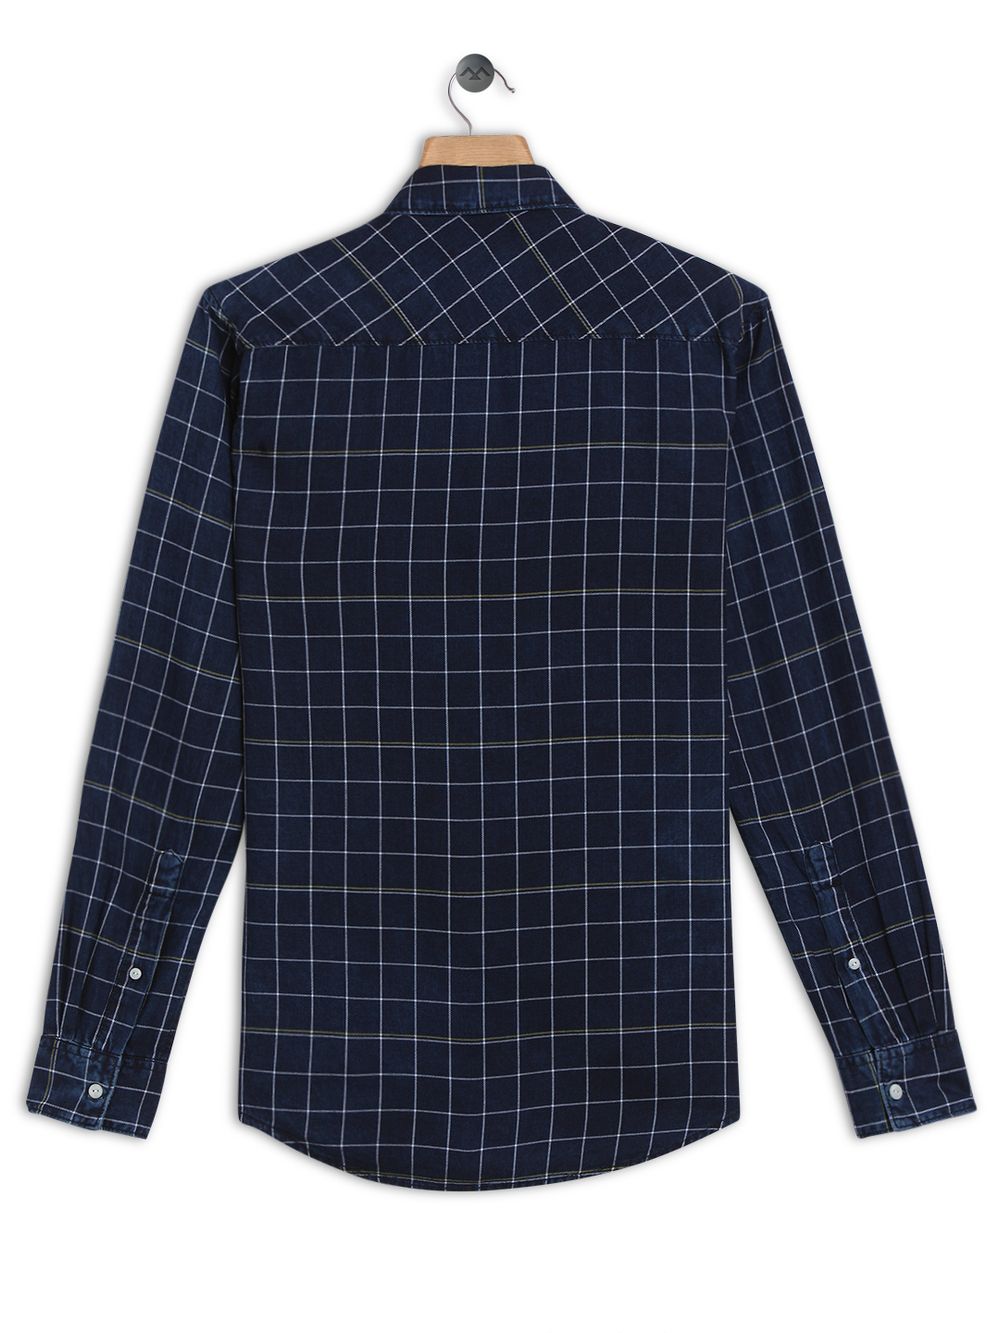 Indigo Blue & White Grid Check Slim Fit Casual Shirt